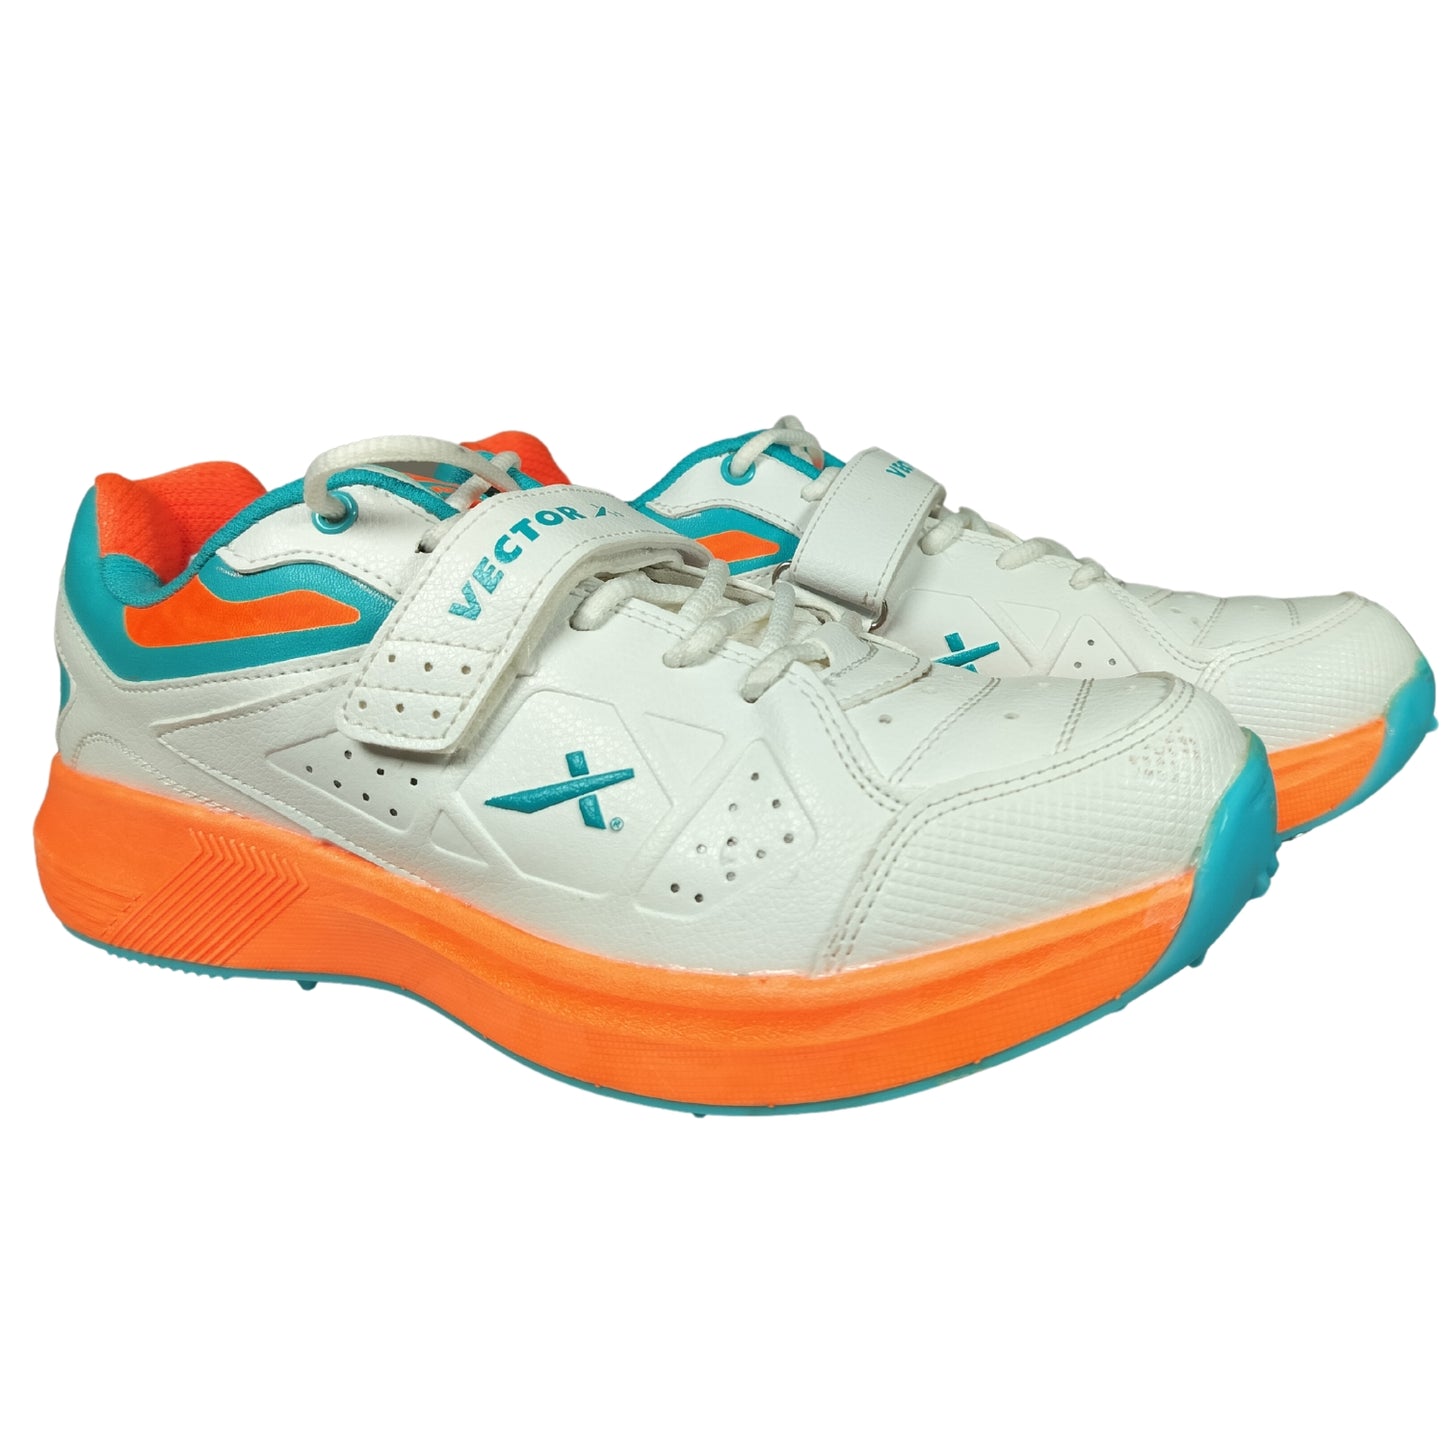 Vector X CKT-200 Metal Spike Cricket Shoe, White/Blue/Orange - Best Price online Prokicksports.com